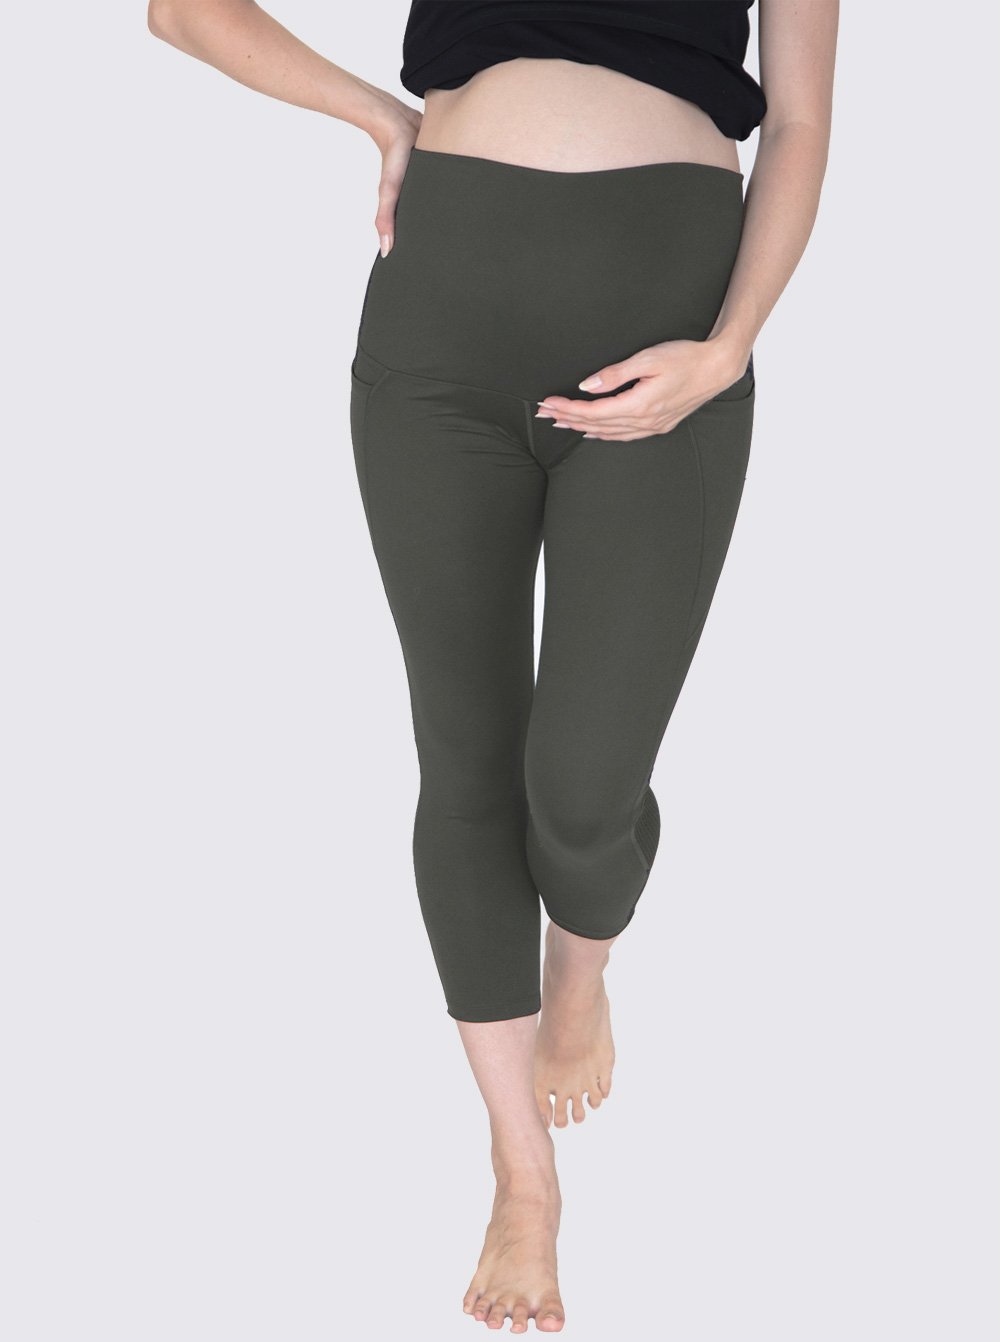 Ilfioreemio Yoga Pants for Women Bootcut Fold Over High Waisted Cotton  Spandex Lounge Workout Flare Leggings - Walmart.com